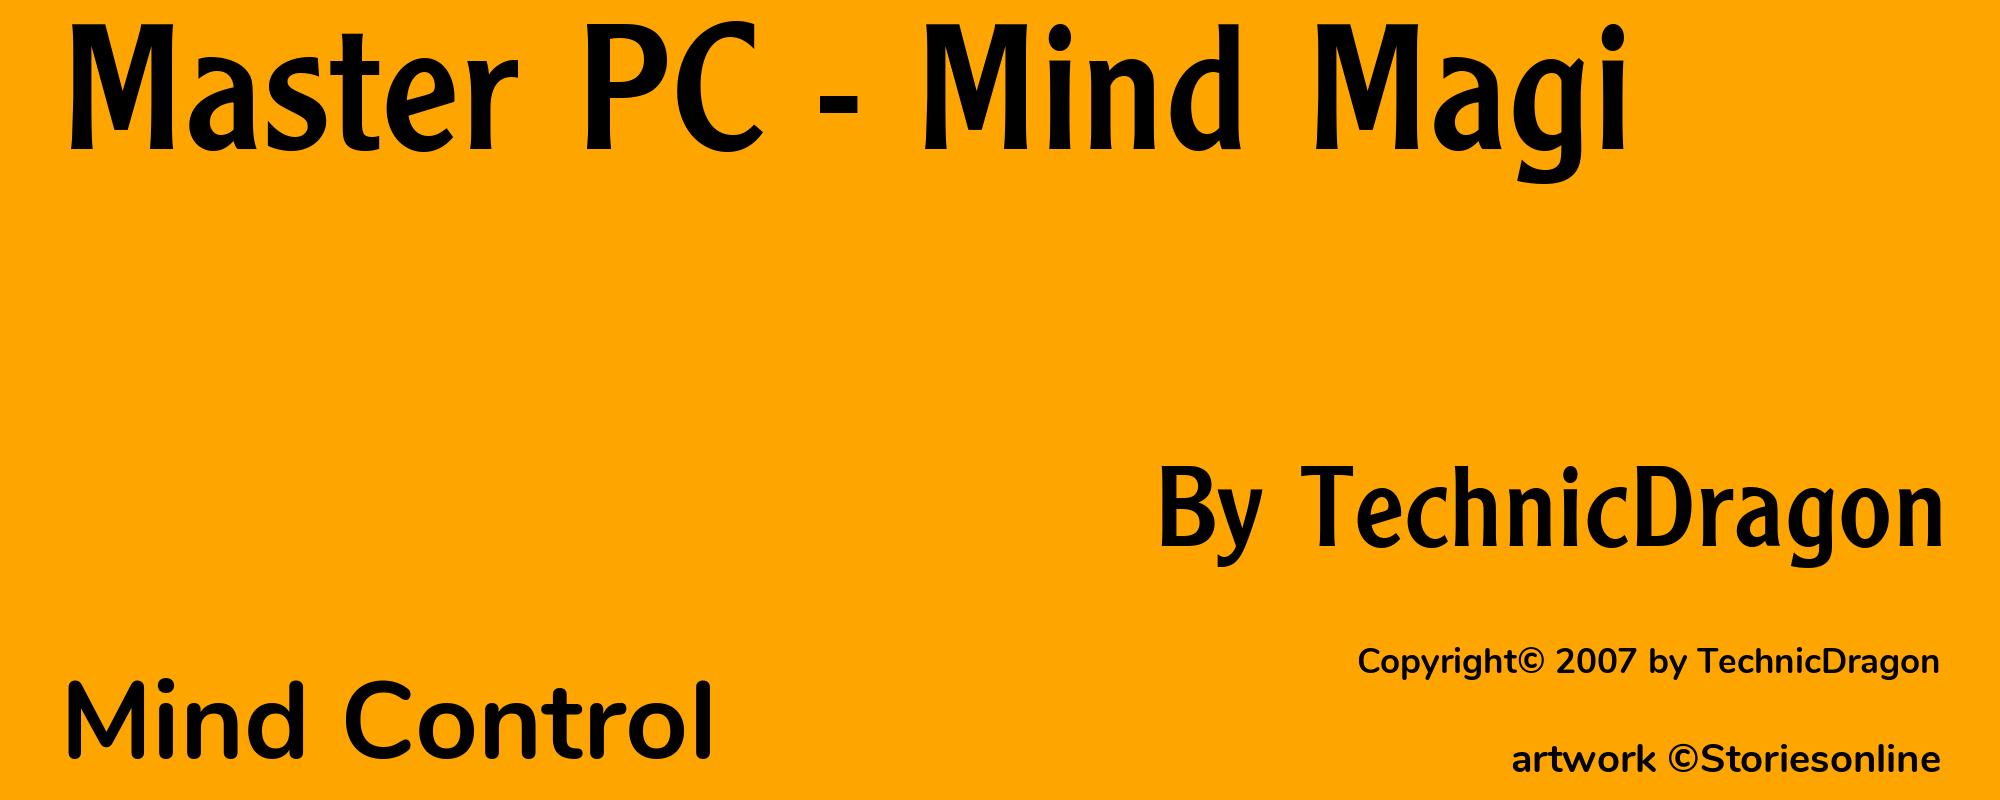 Master PC - Mind Magi - Cover